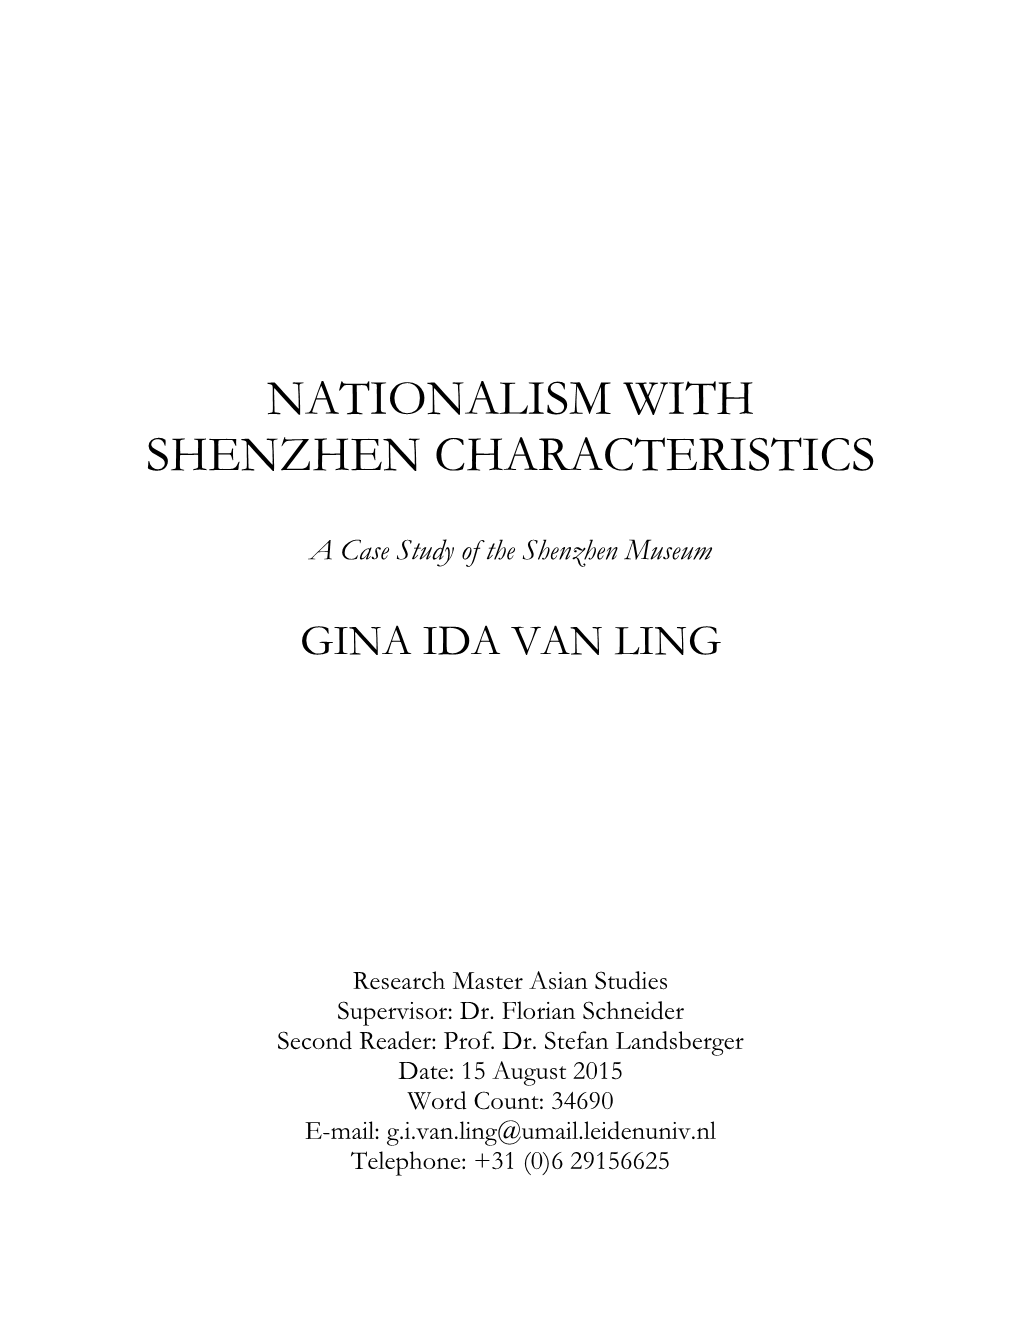 Nationalism with Shenzhen Characteristics